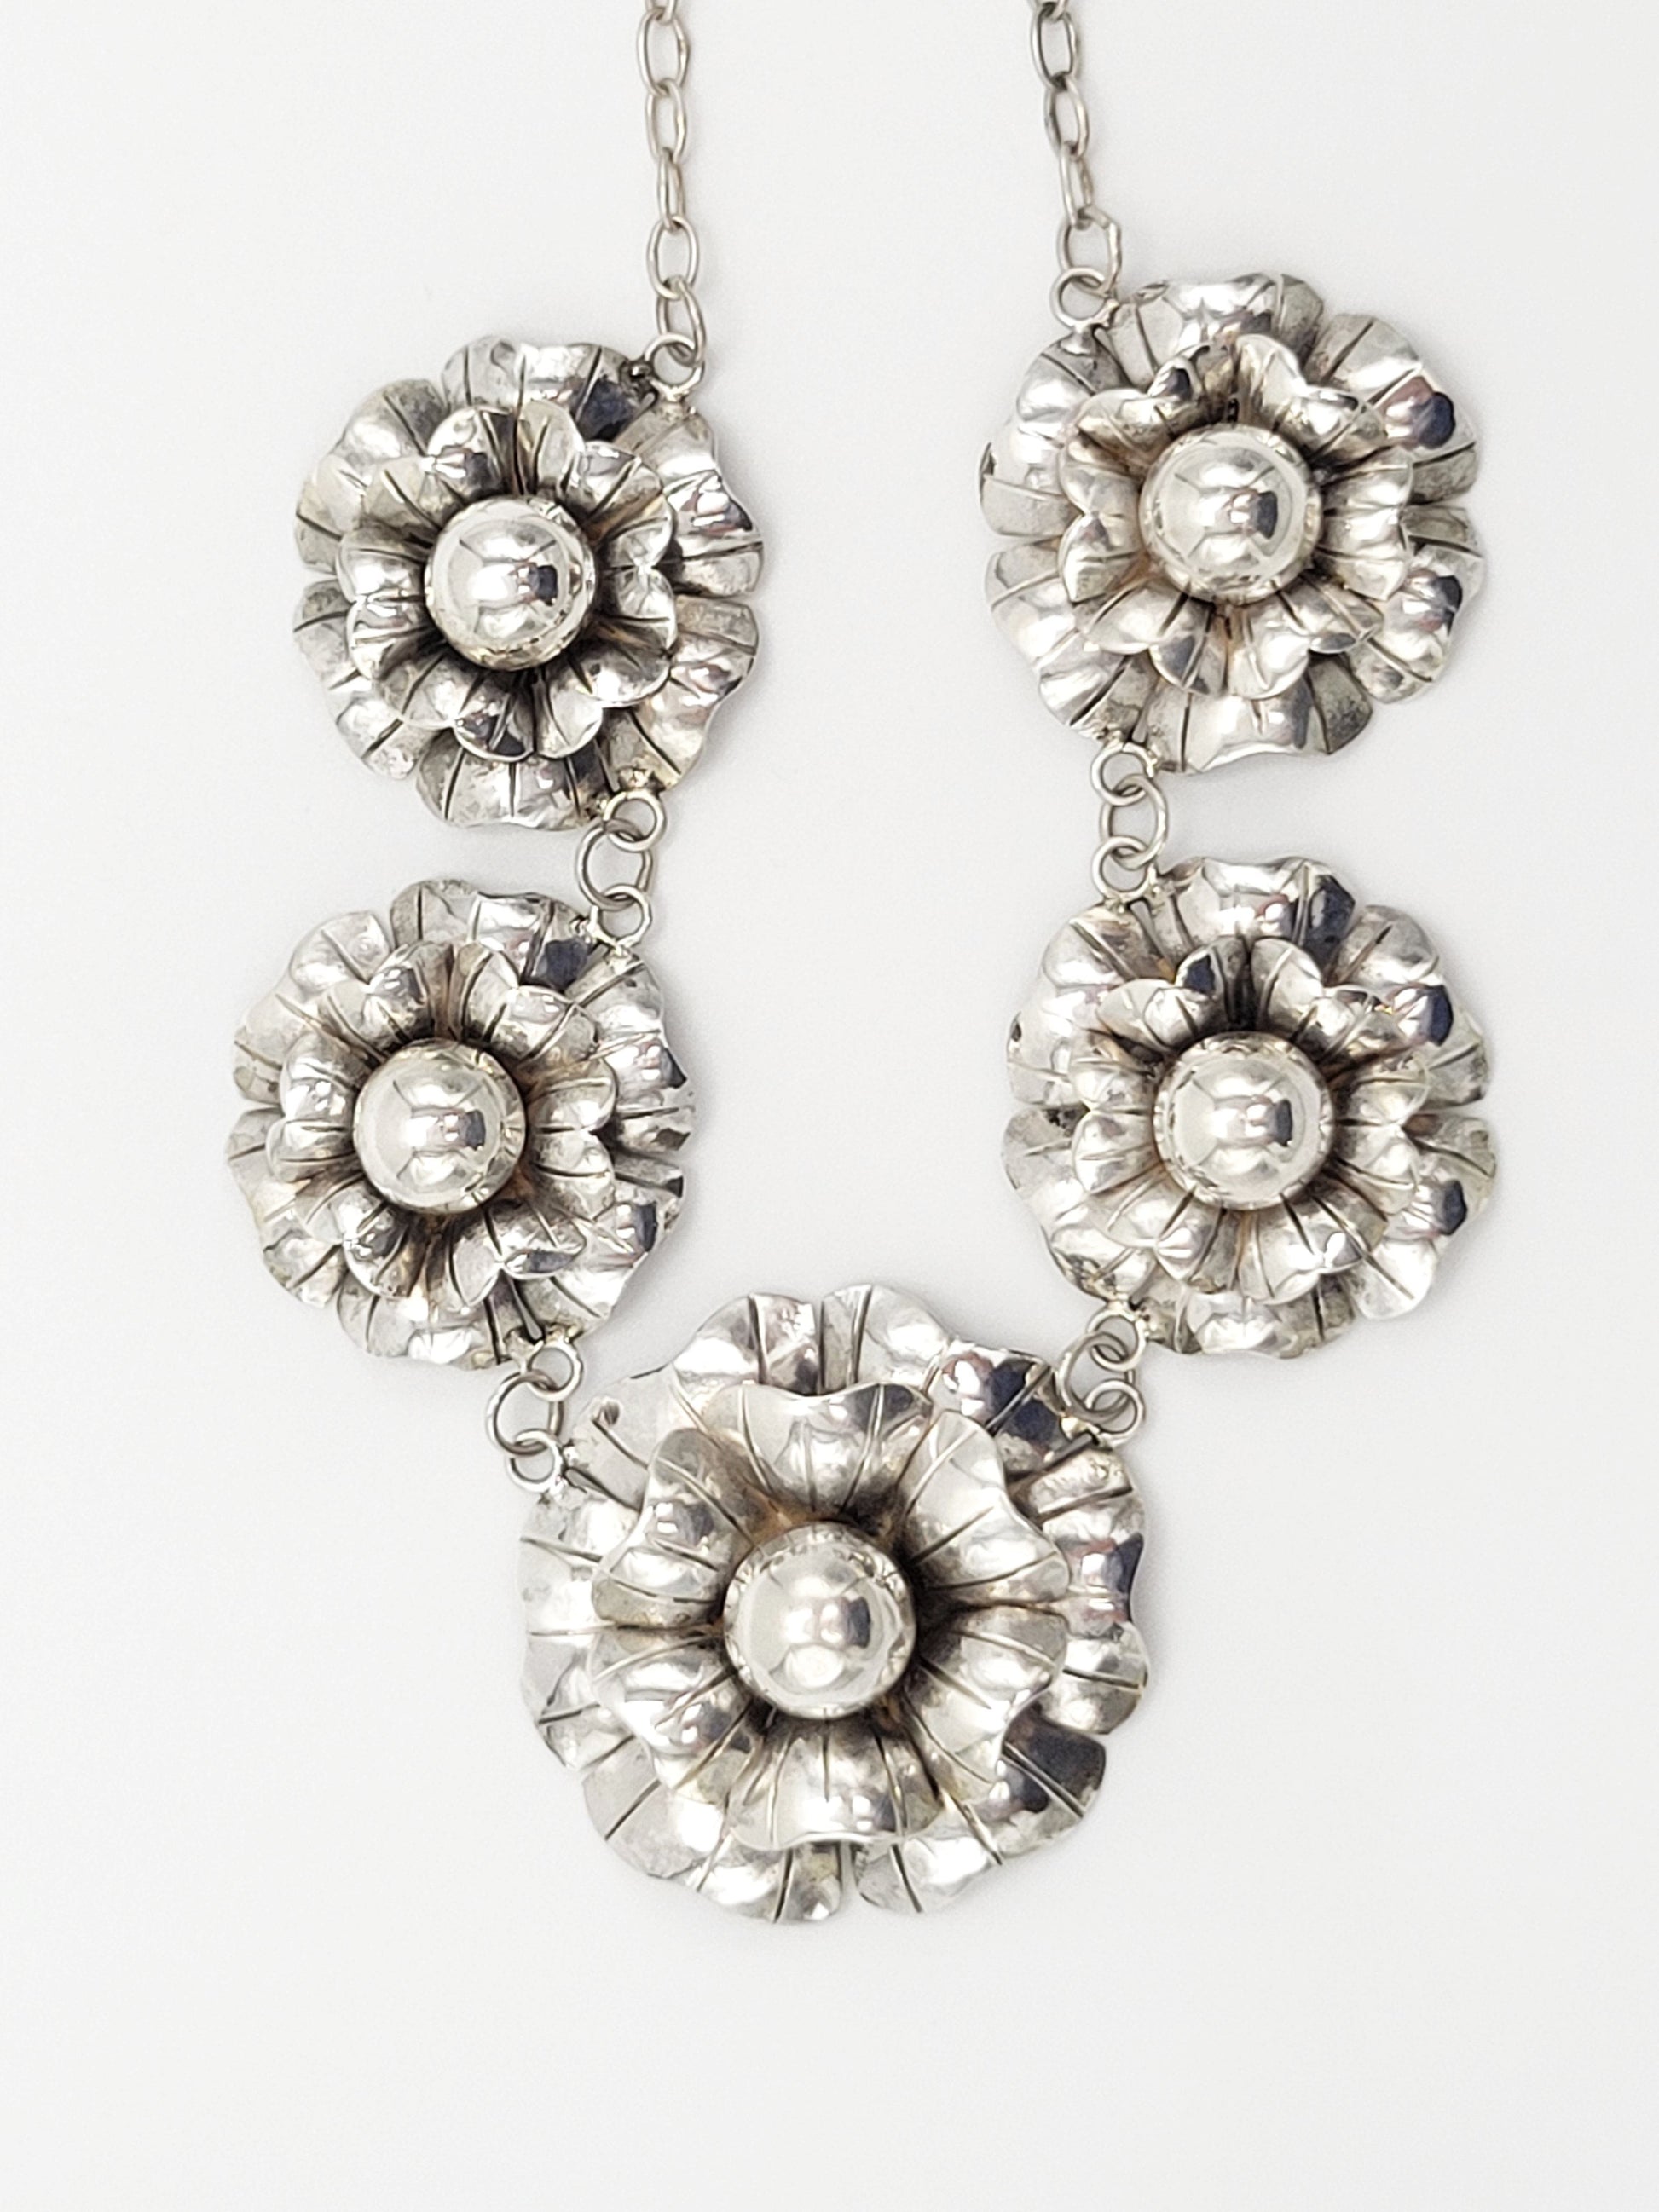 Mexico Silver Jewelry Designer Sterling Silver Necklace Circa